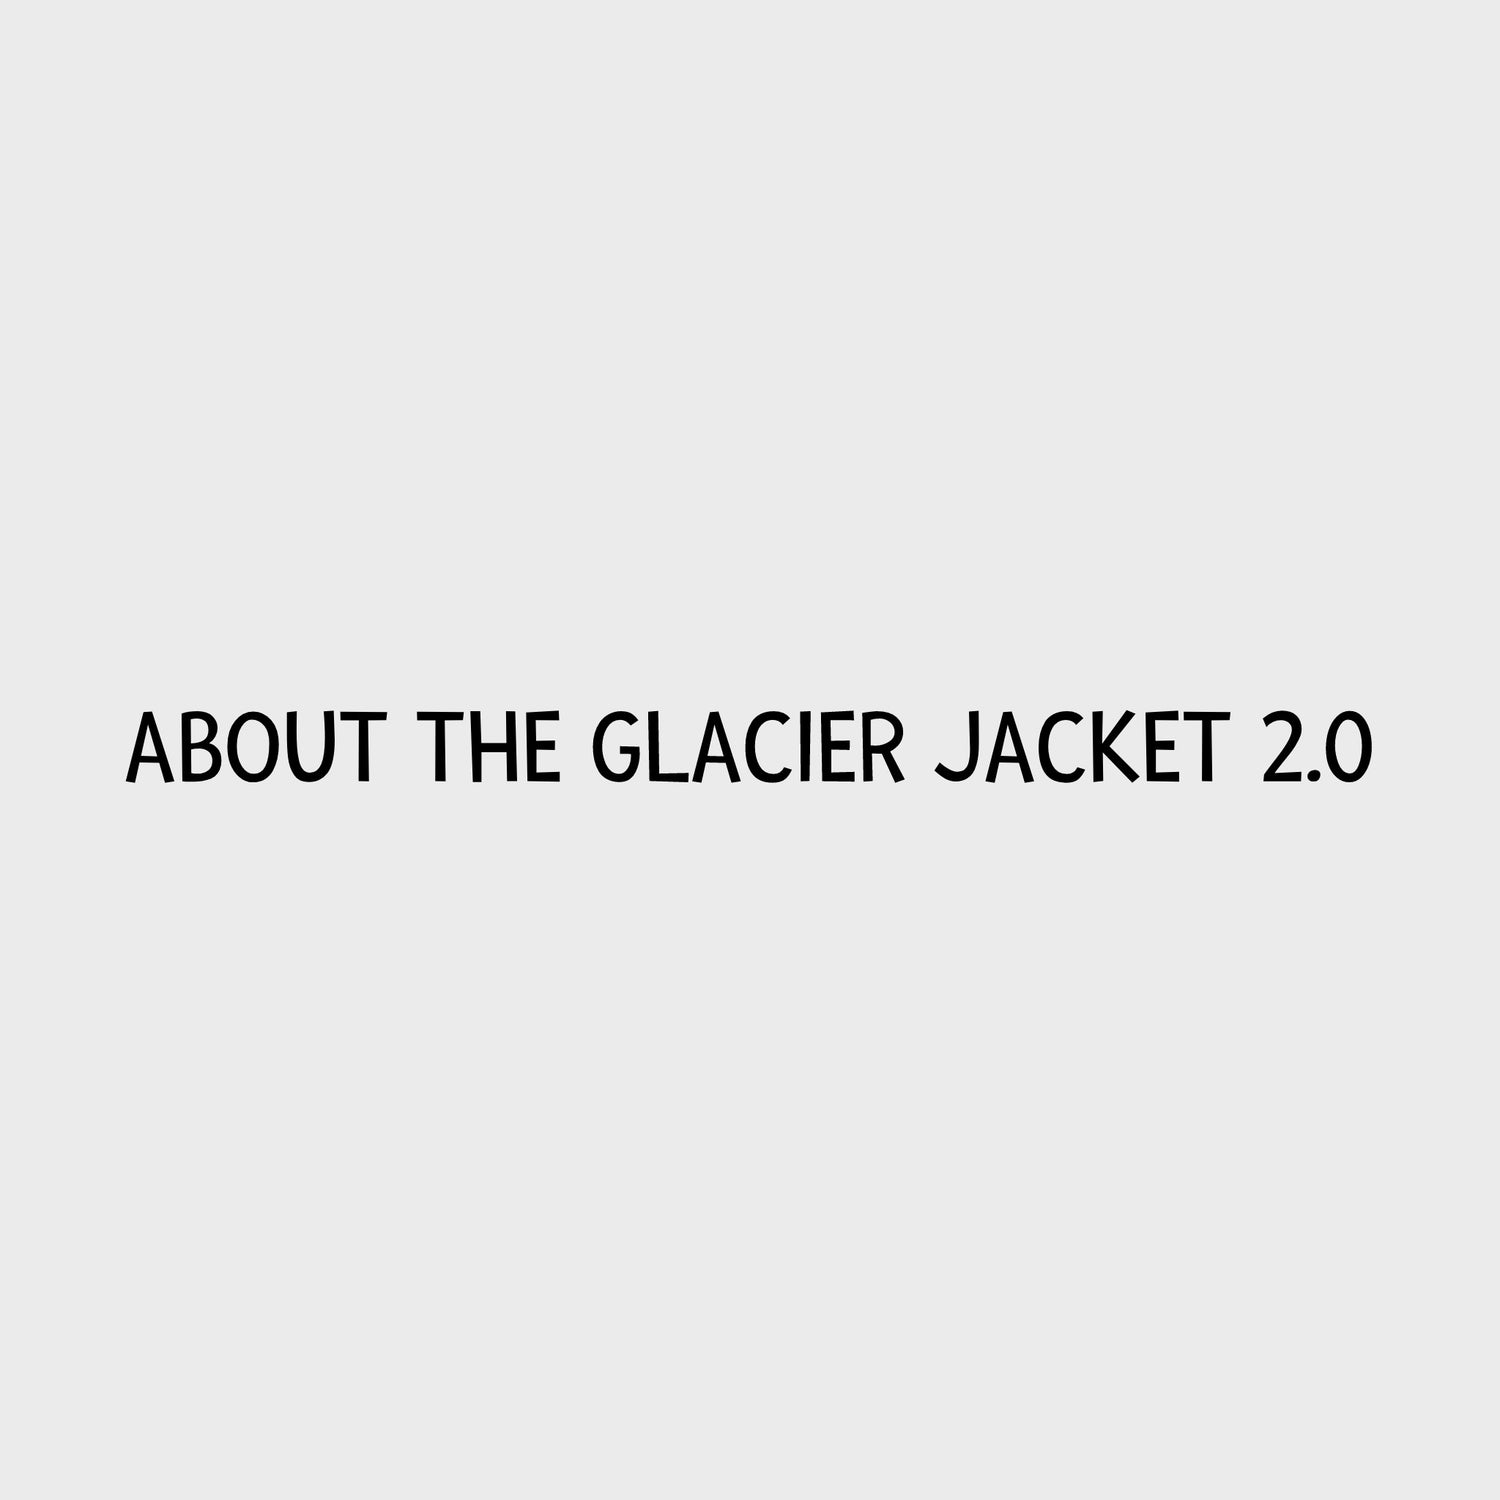 Video - Non-stop dogwear Glacier Jacket 2.0